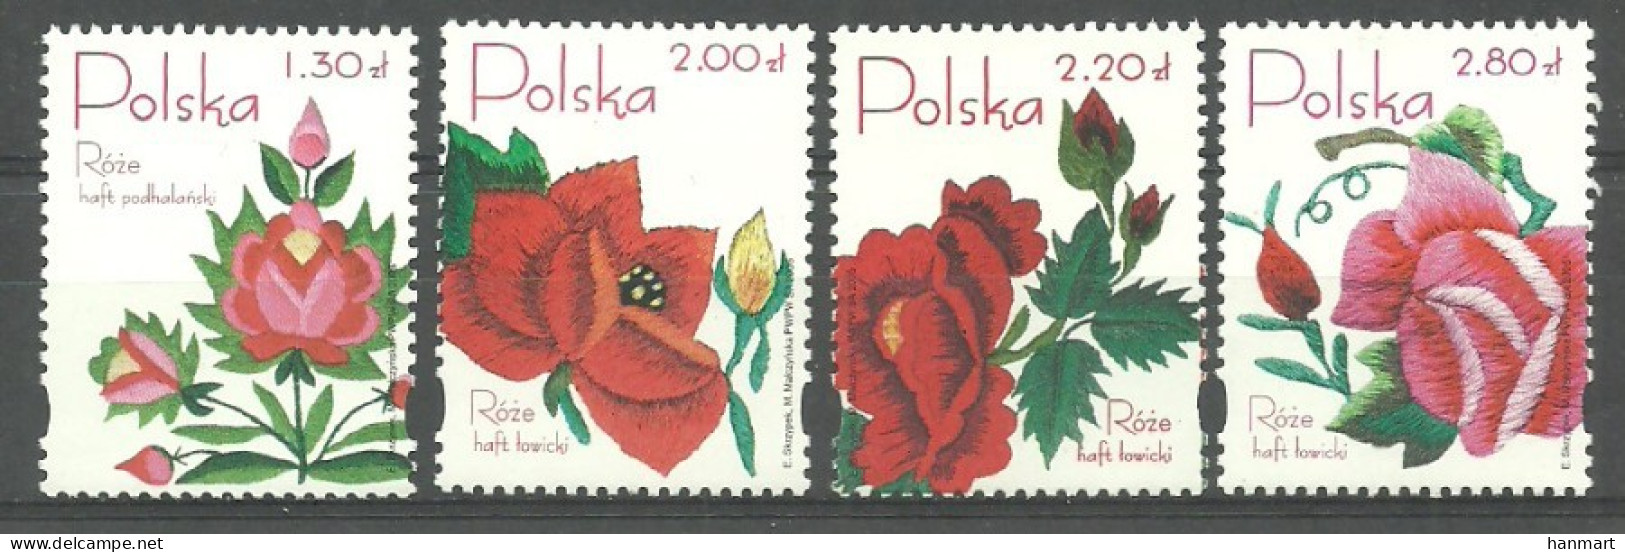 Poland 2005 Mi 4195-4198 Fi 4045-4048 MNH  (ZE4 PLD4195-4198) - Textiles